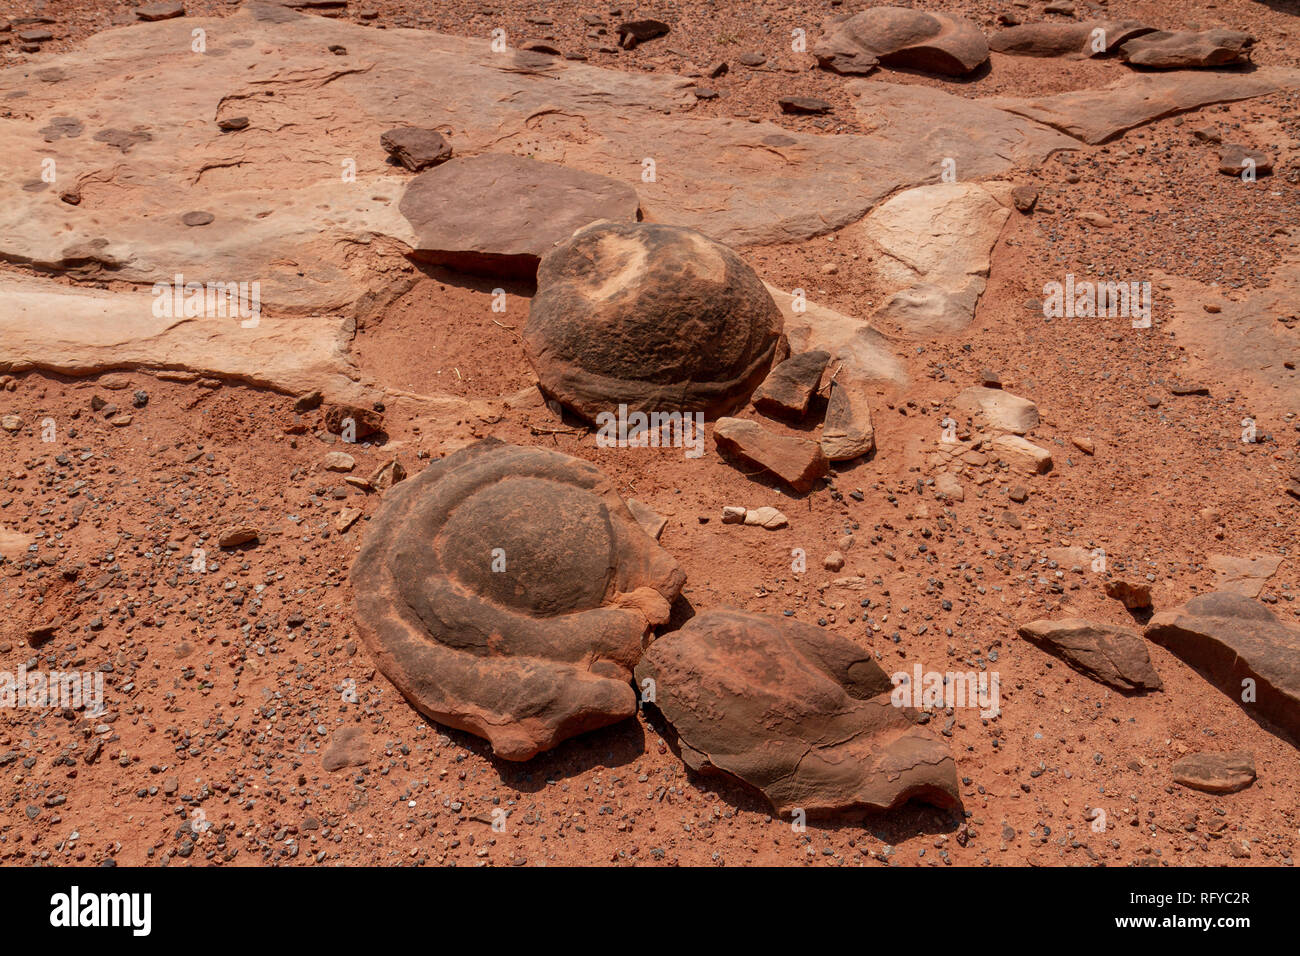 Geological concretions, Moenkopi Dinosaur Tracks site near Tuba City, Arizona, United States. Stock Photo